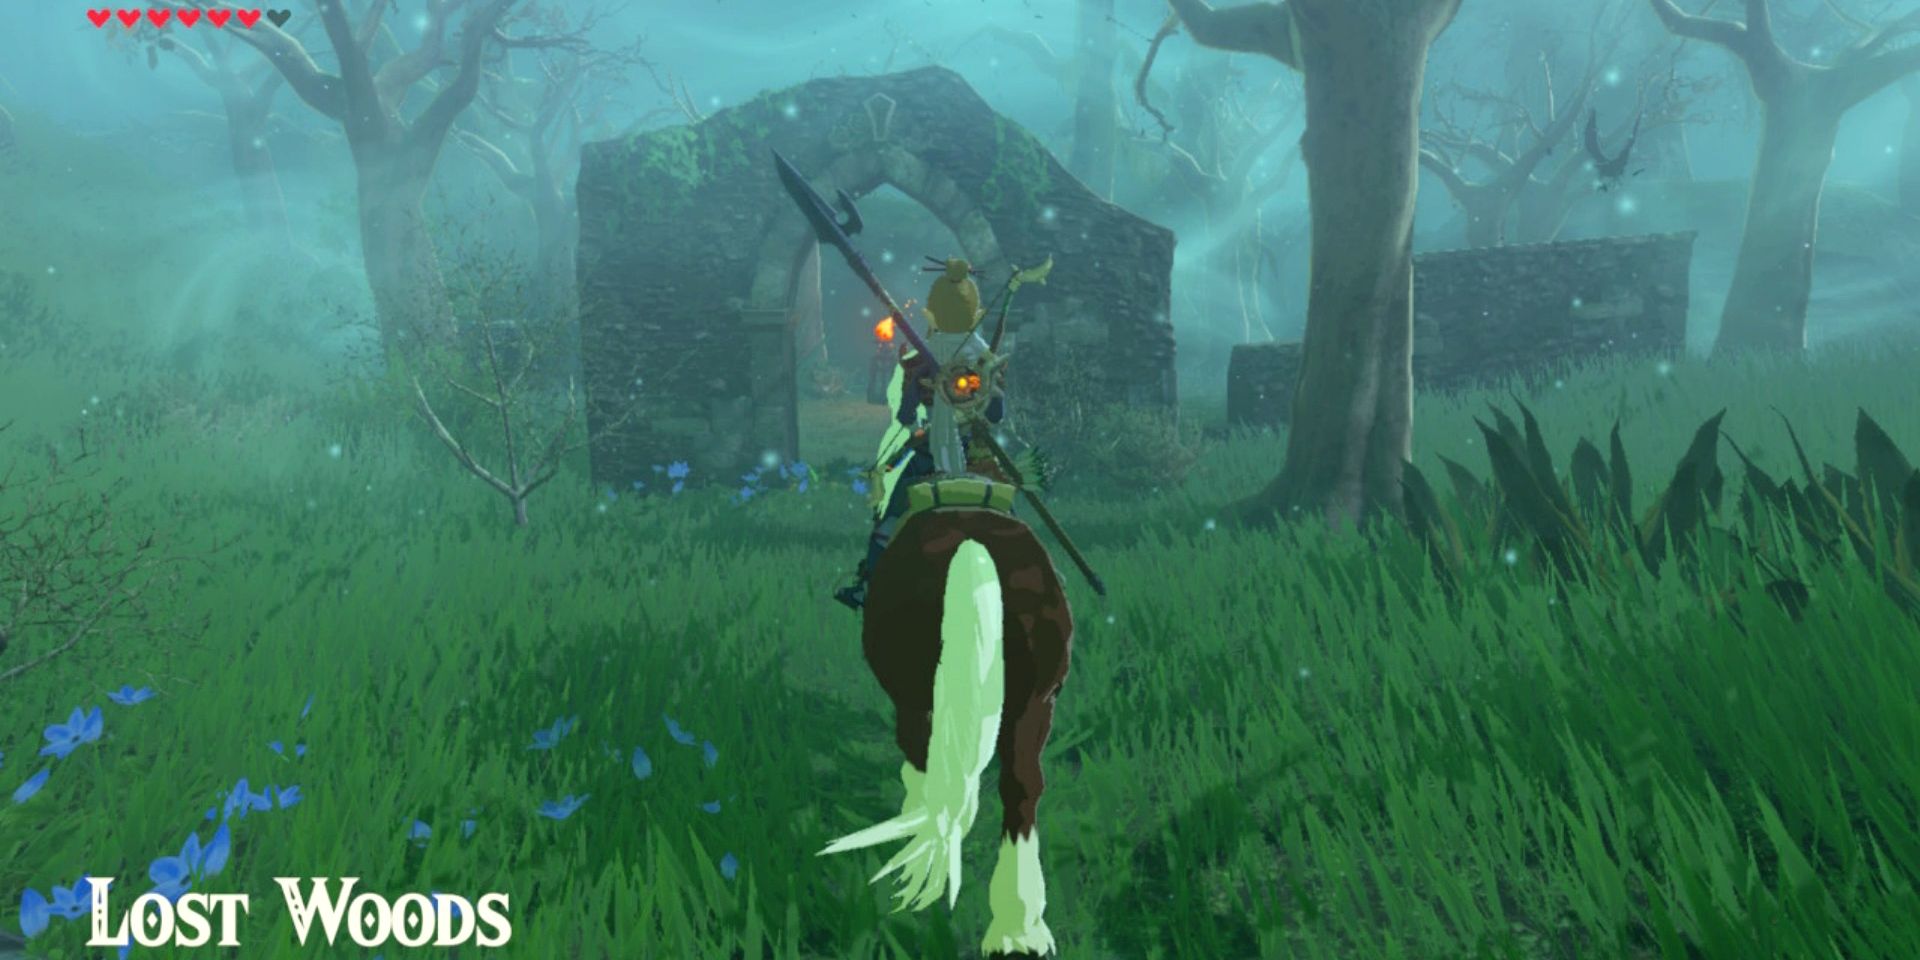 Entrance to the Lost Woods in Legend of Zelda: BotW